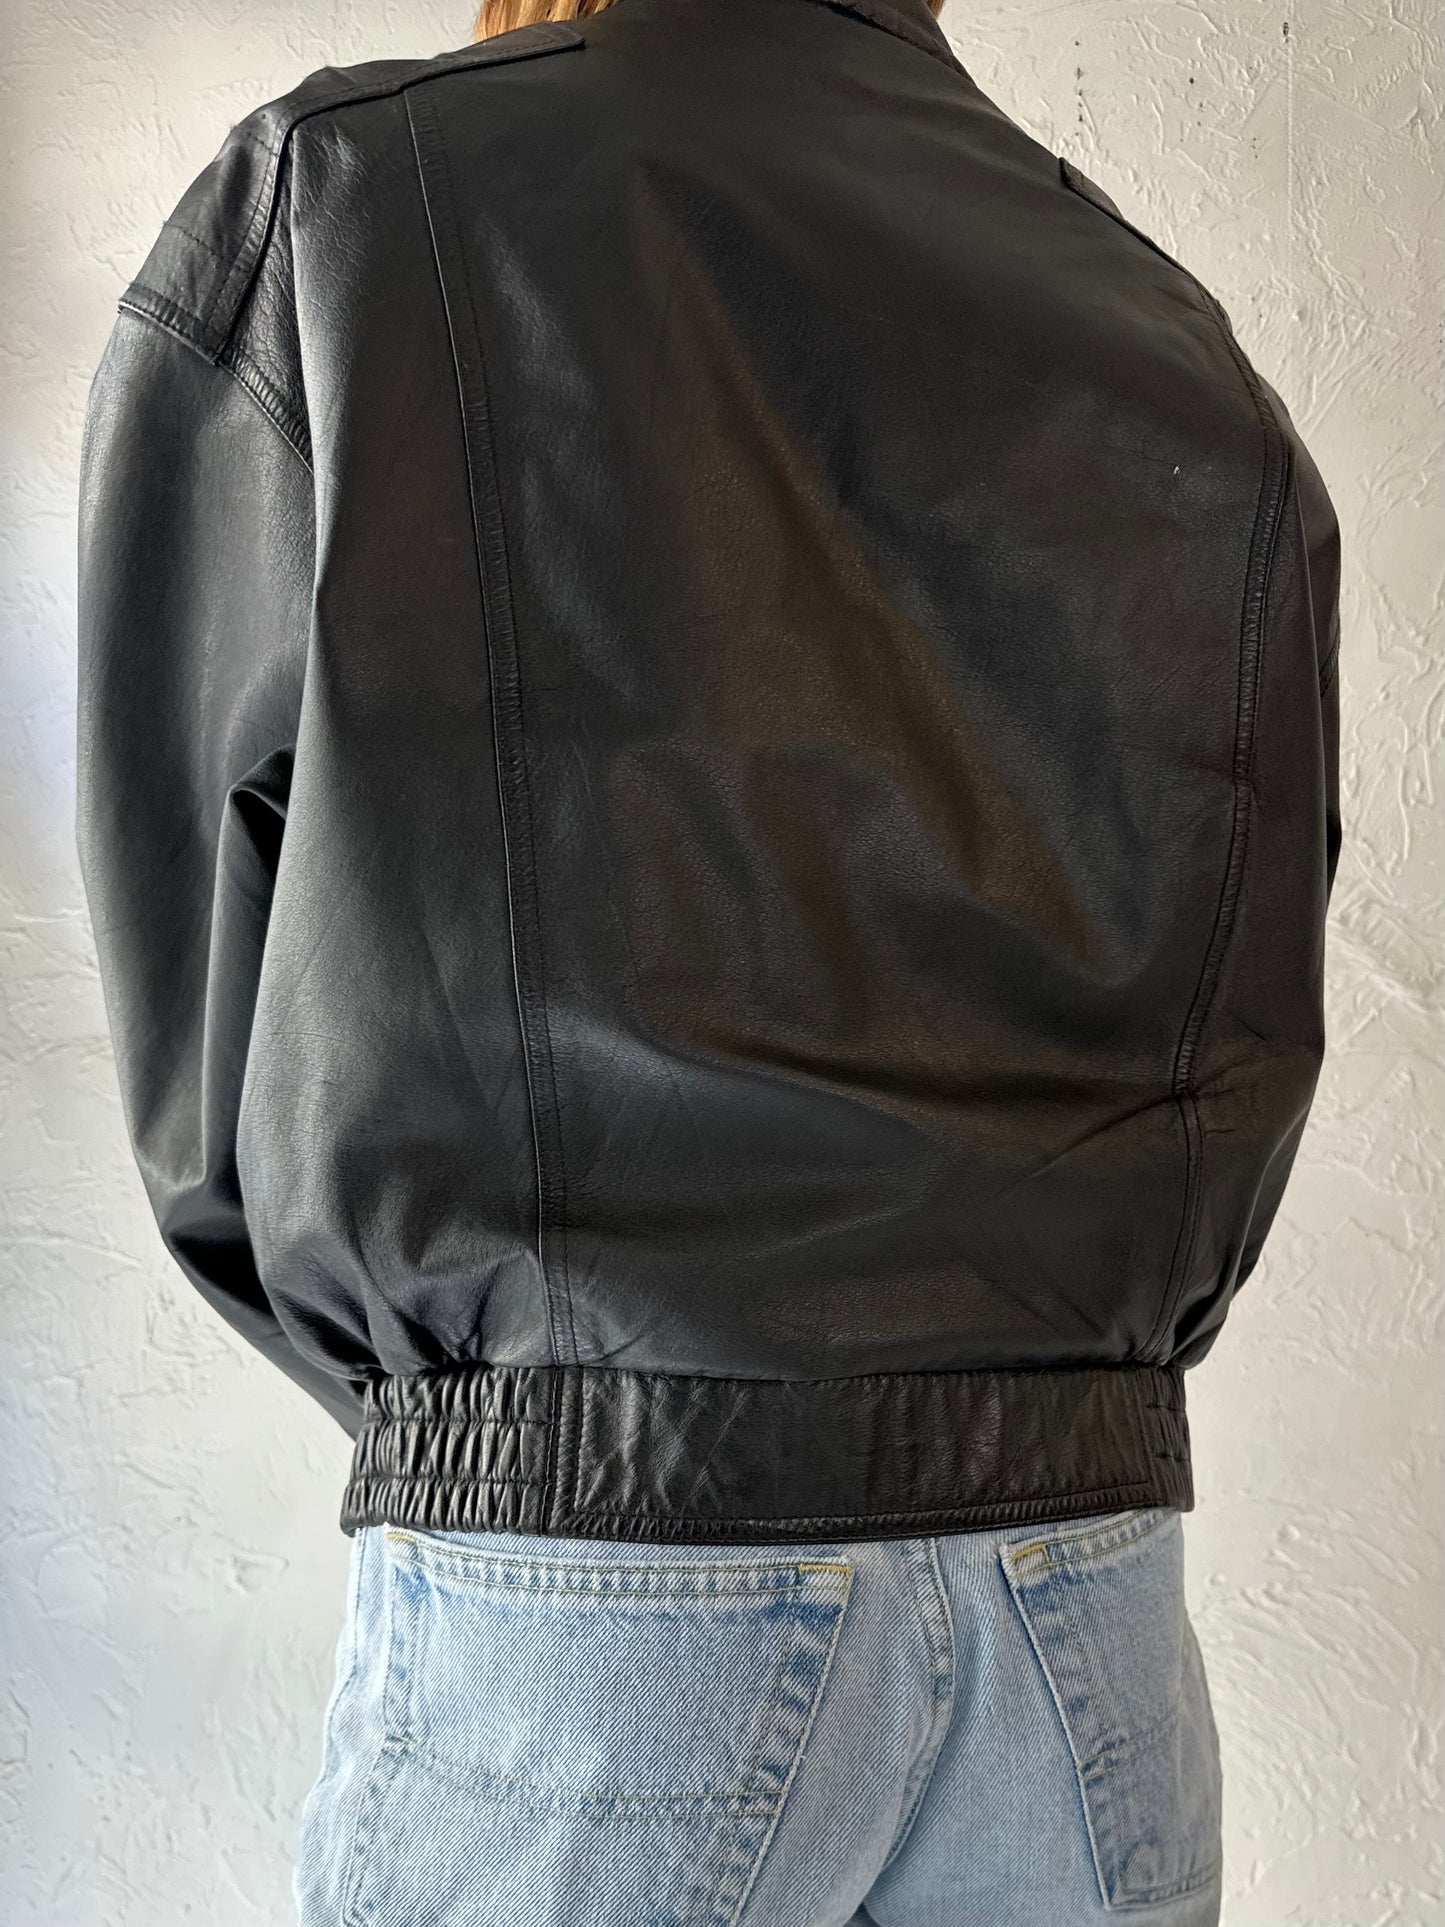 90s 'Byrnes & Baker' Black Leather Bomber Jacket / Medium